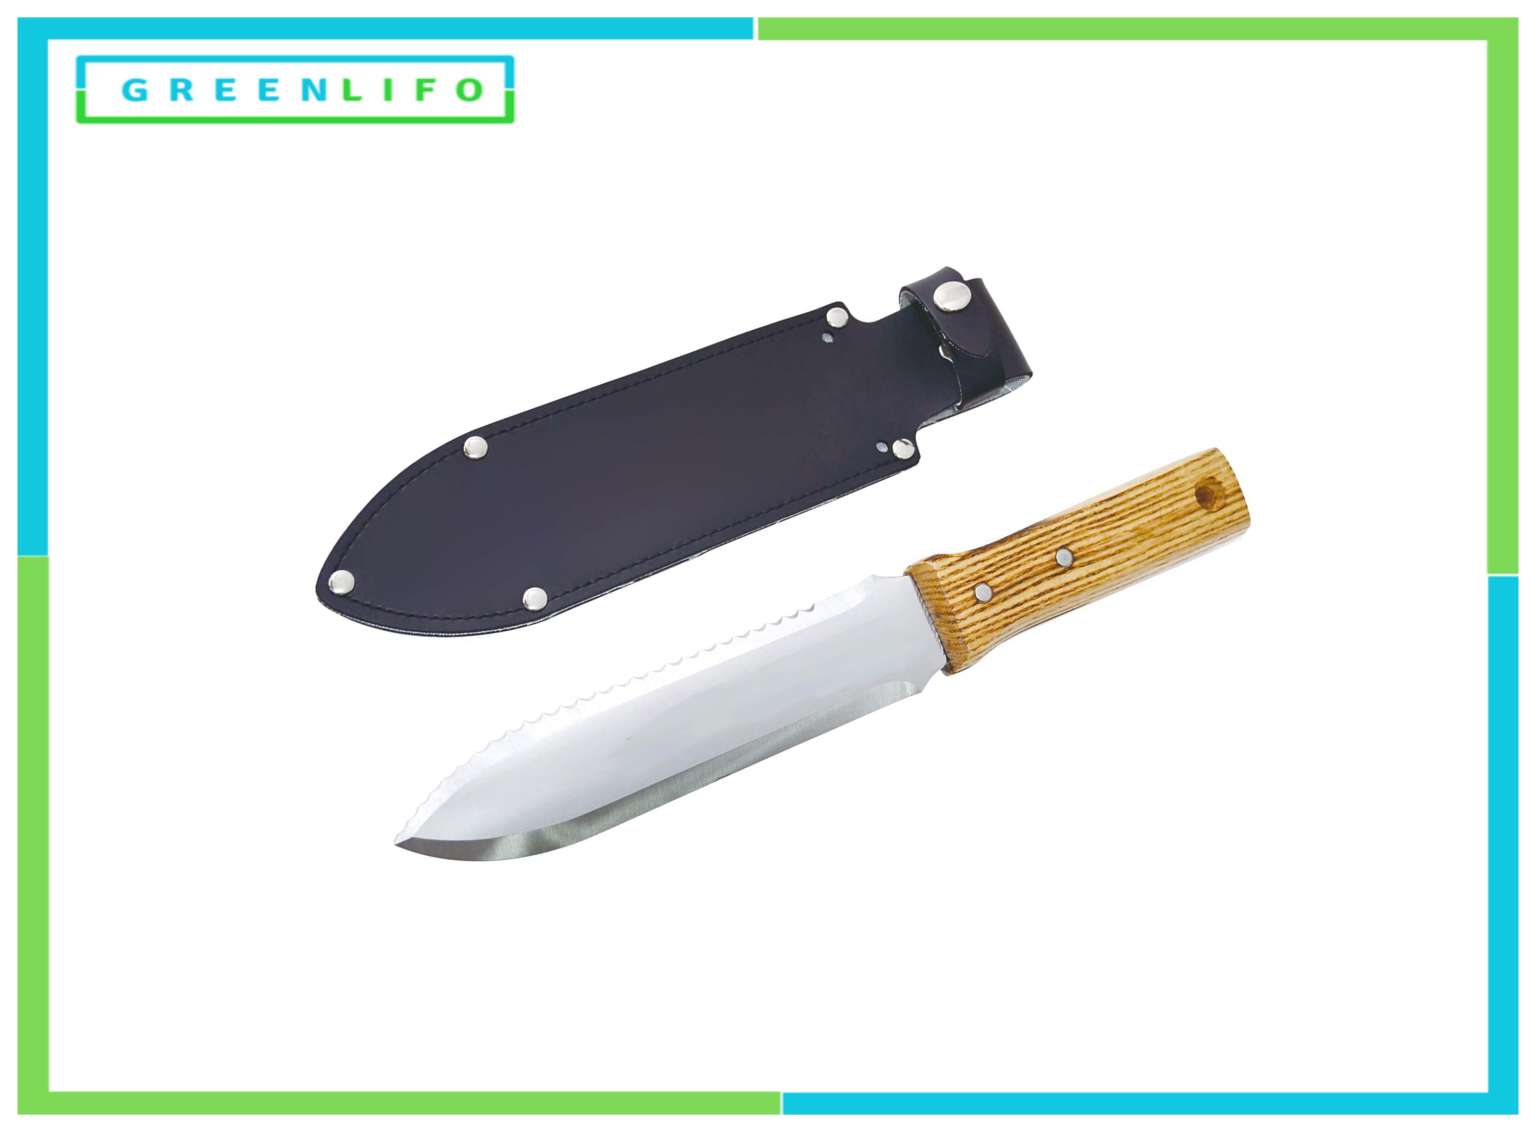 Knife farm tools and equipment